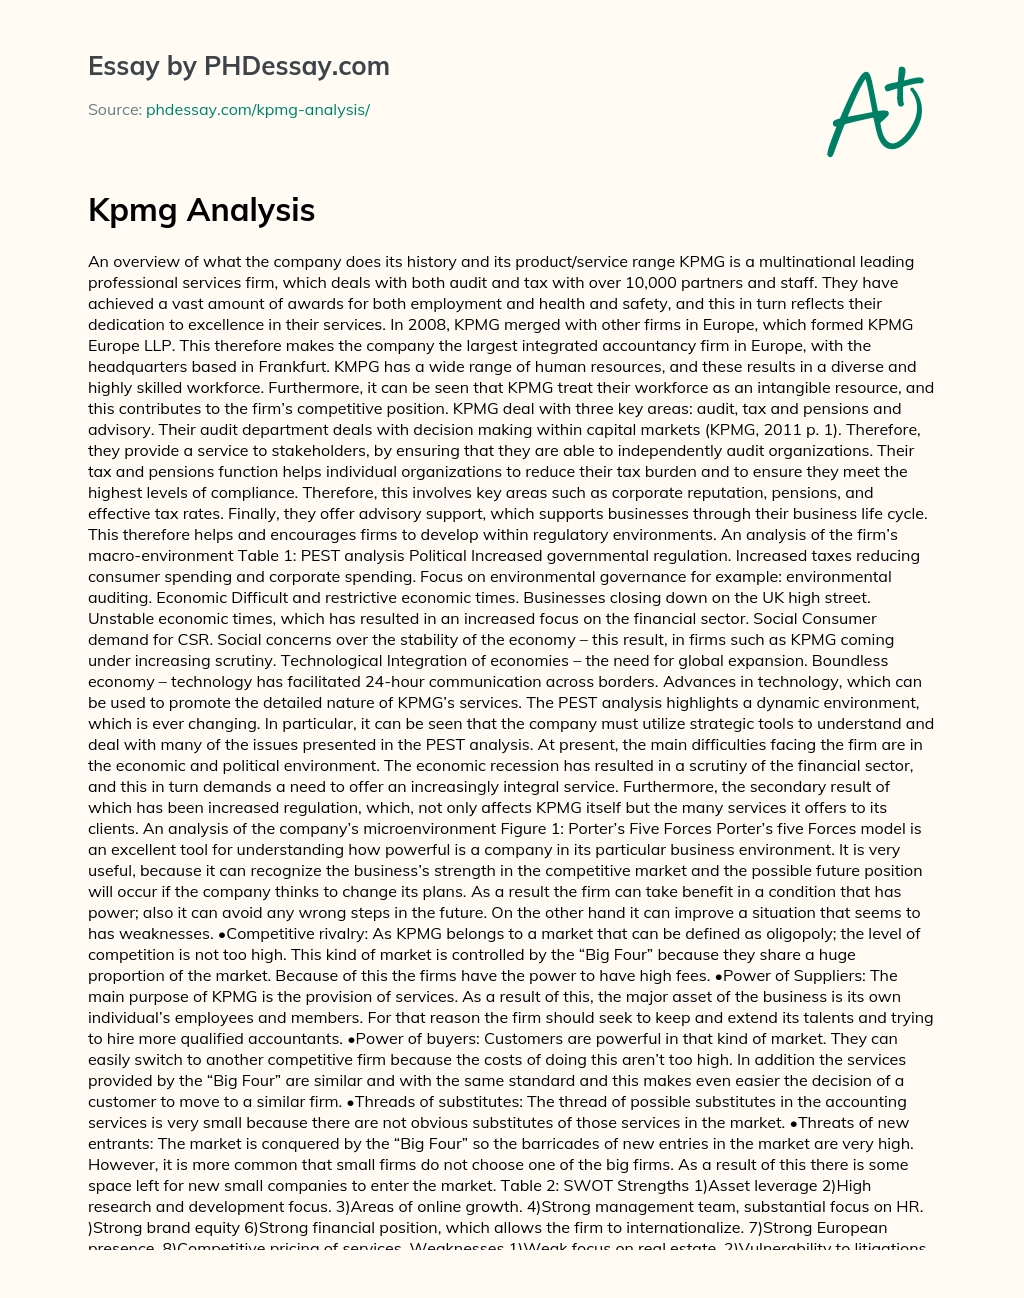 Kpmg Analysis essay